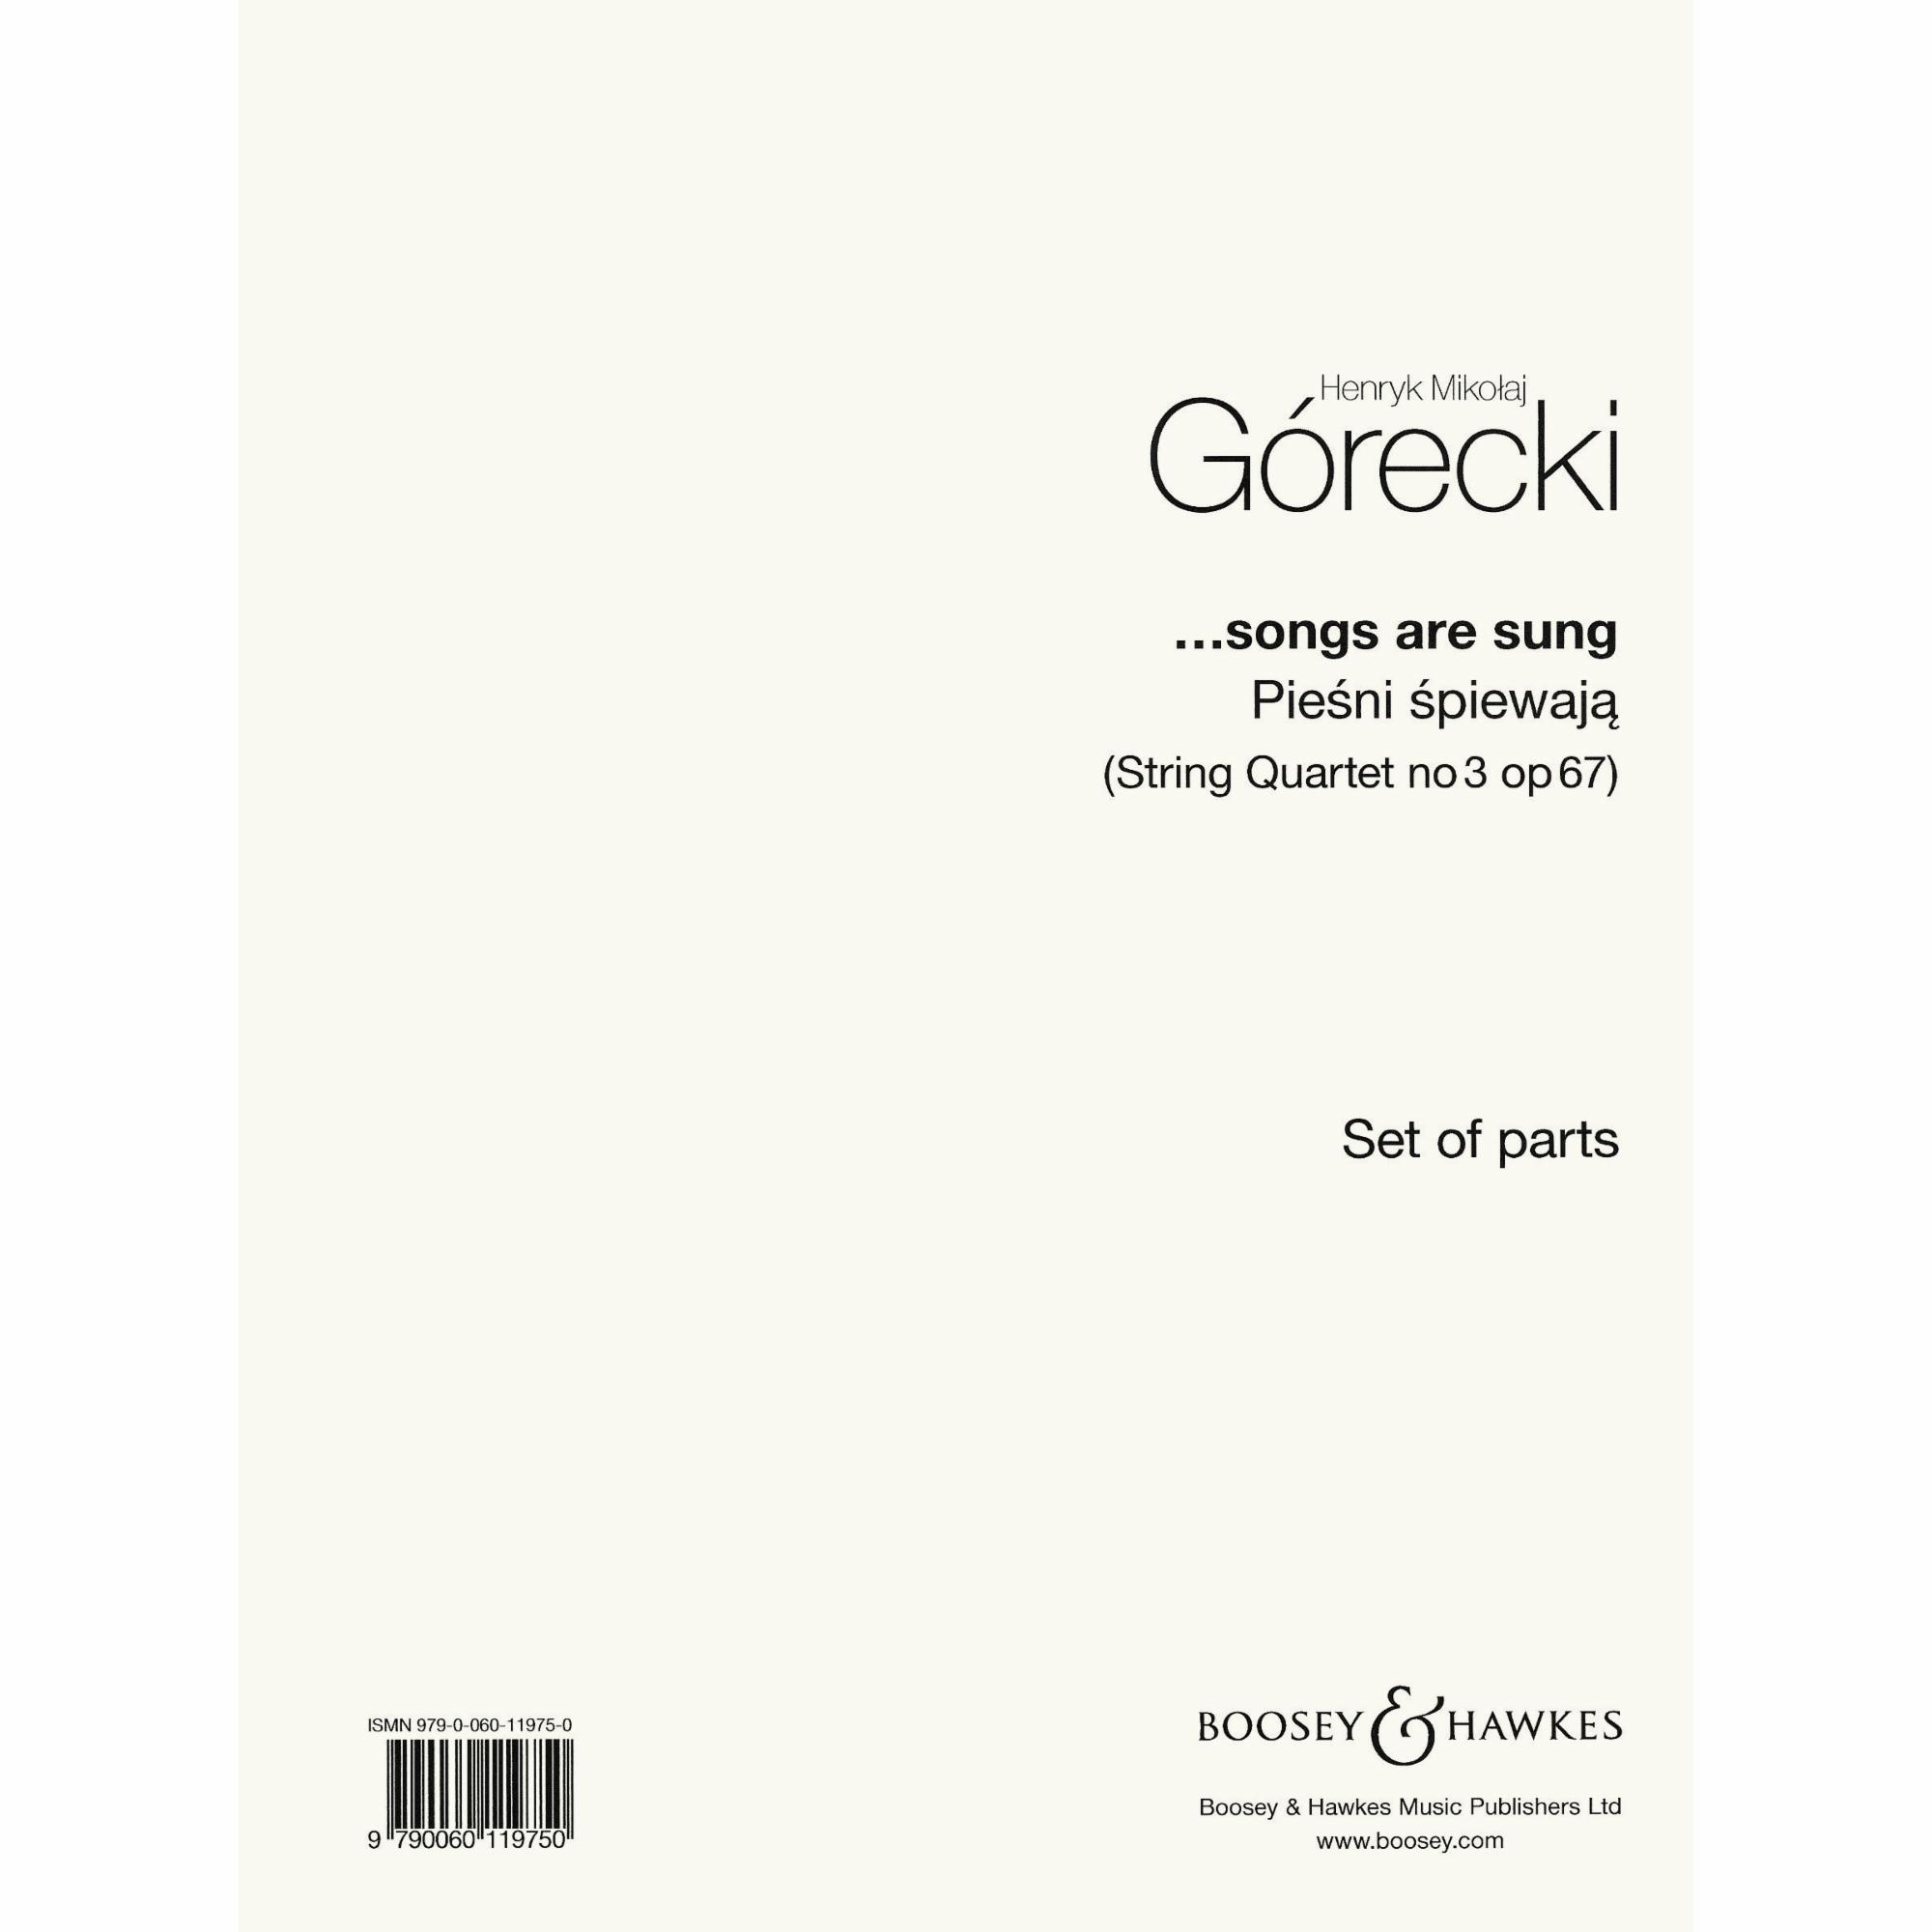 Gorecki -- ...songs are sung for String Quartet